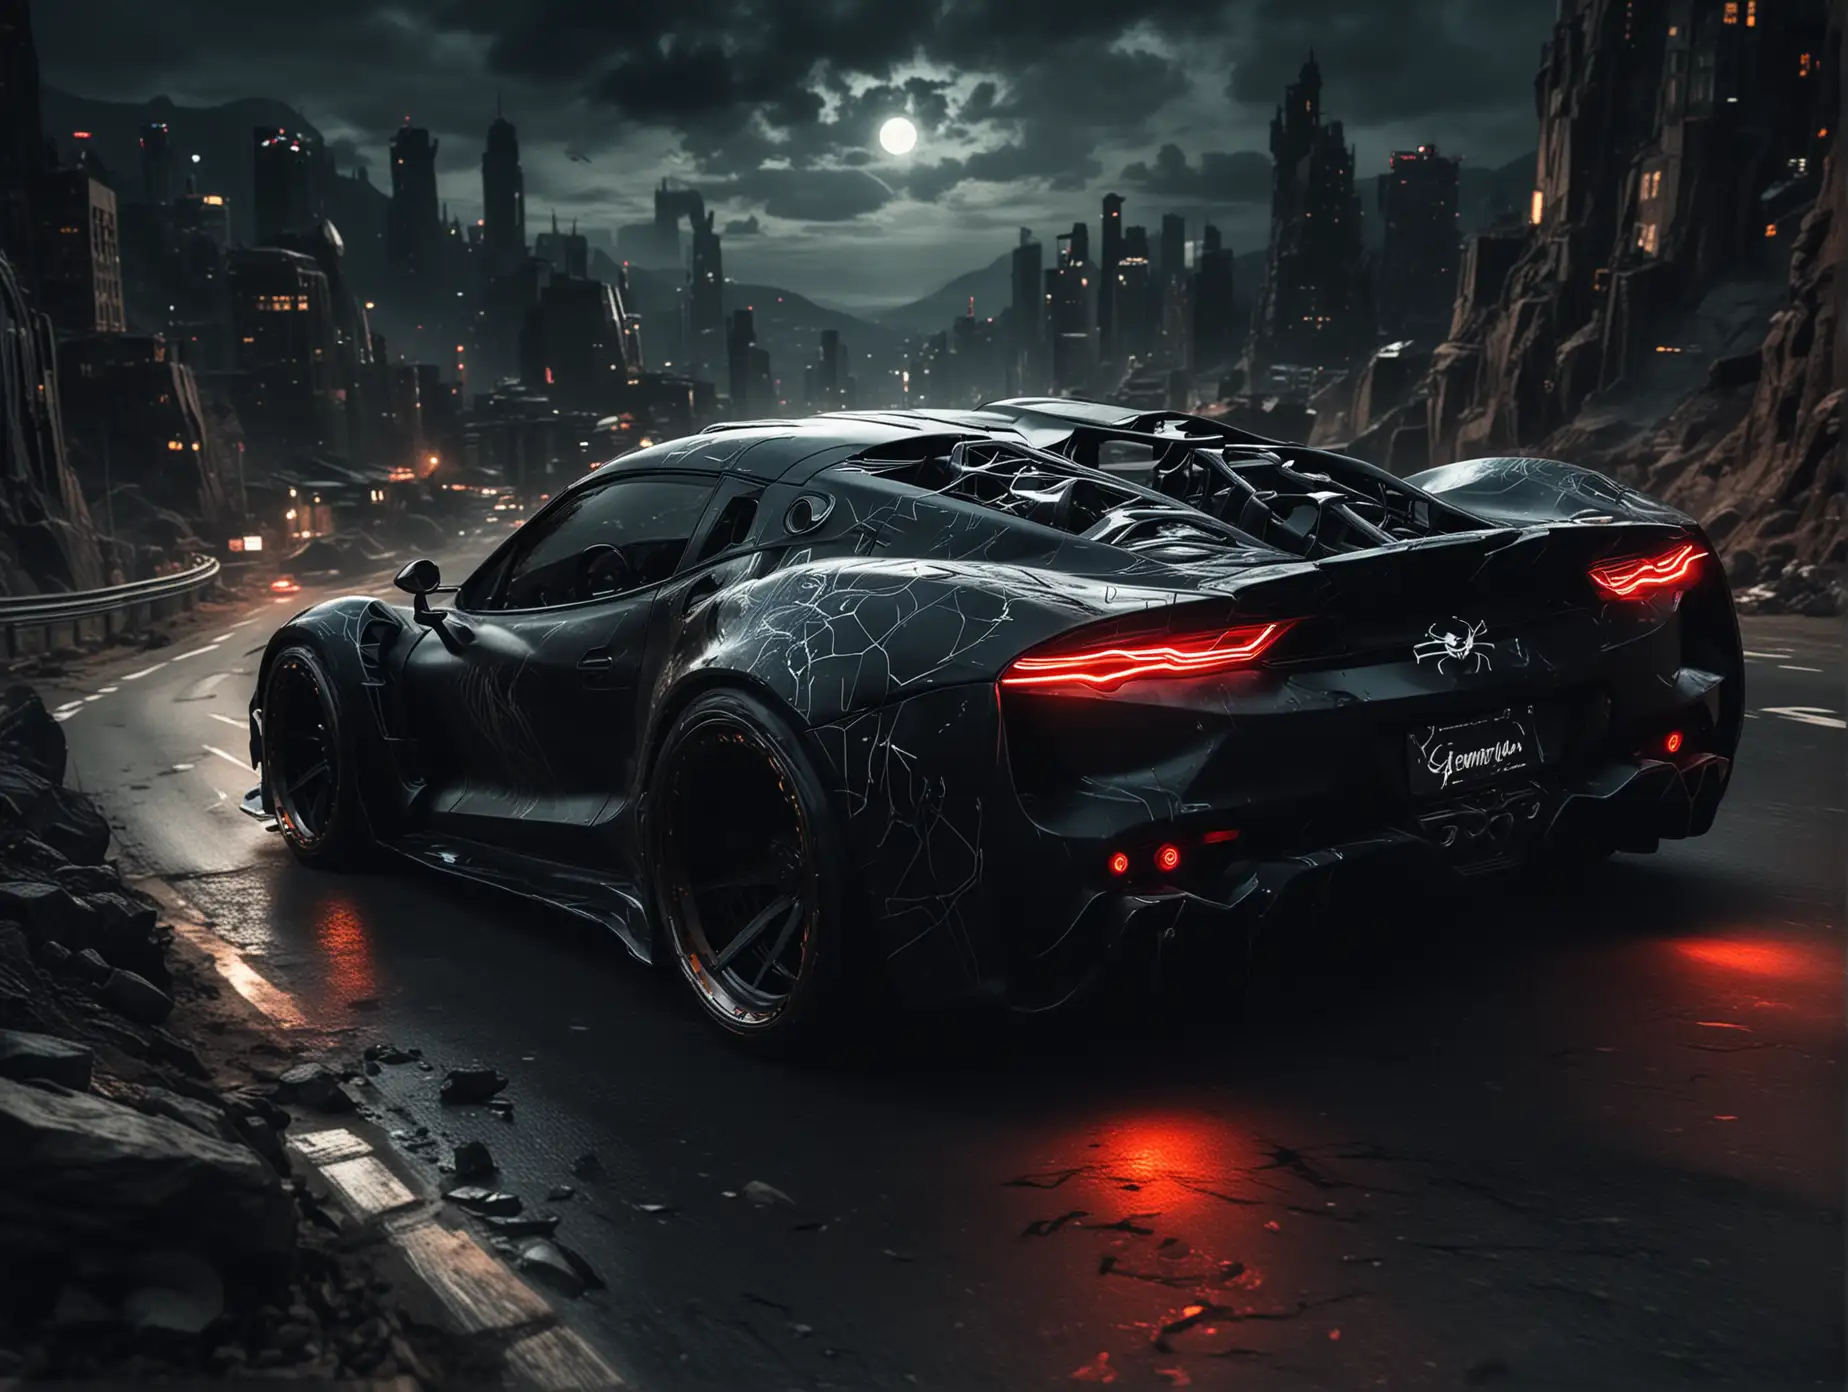 Futuristic-Spiderman-Cars-Venomous-Night-Drift-Downhill